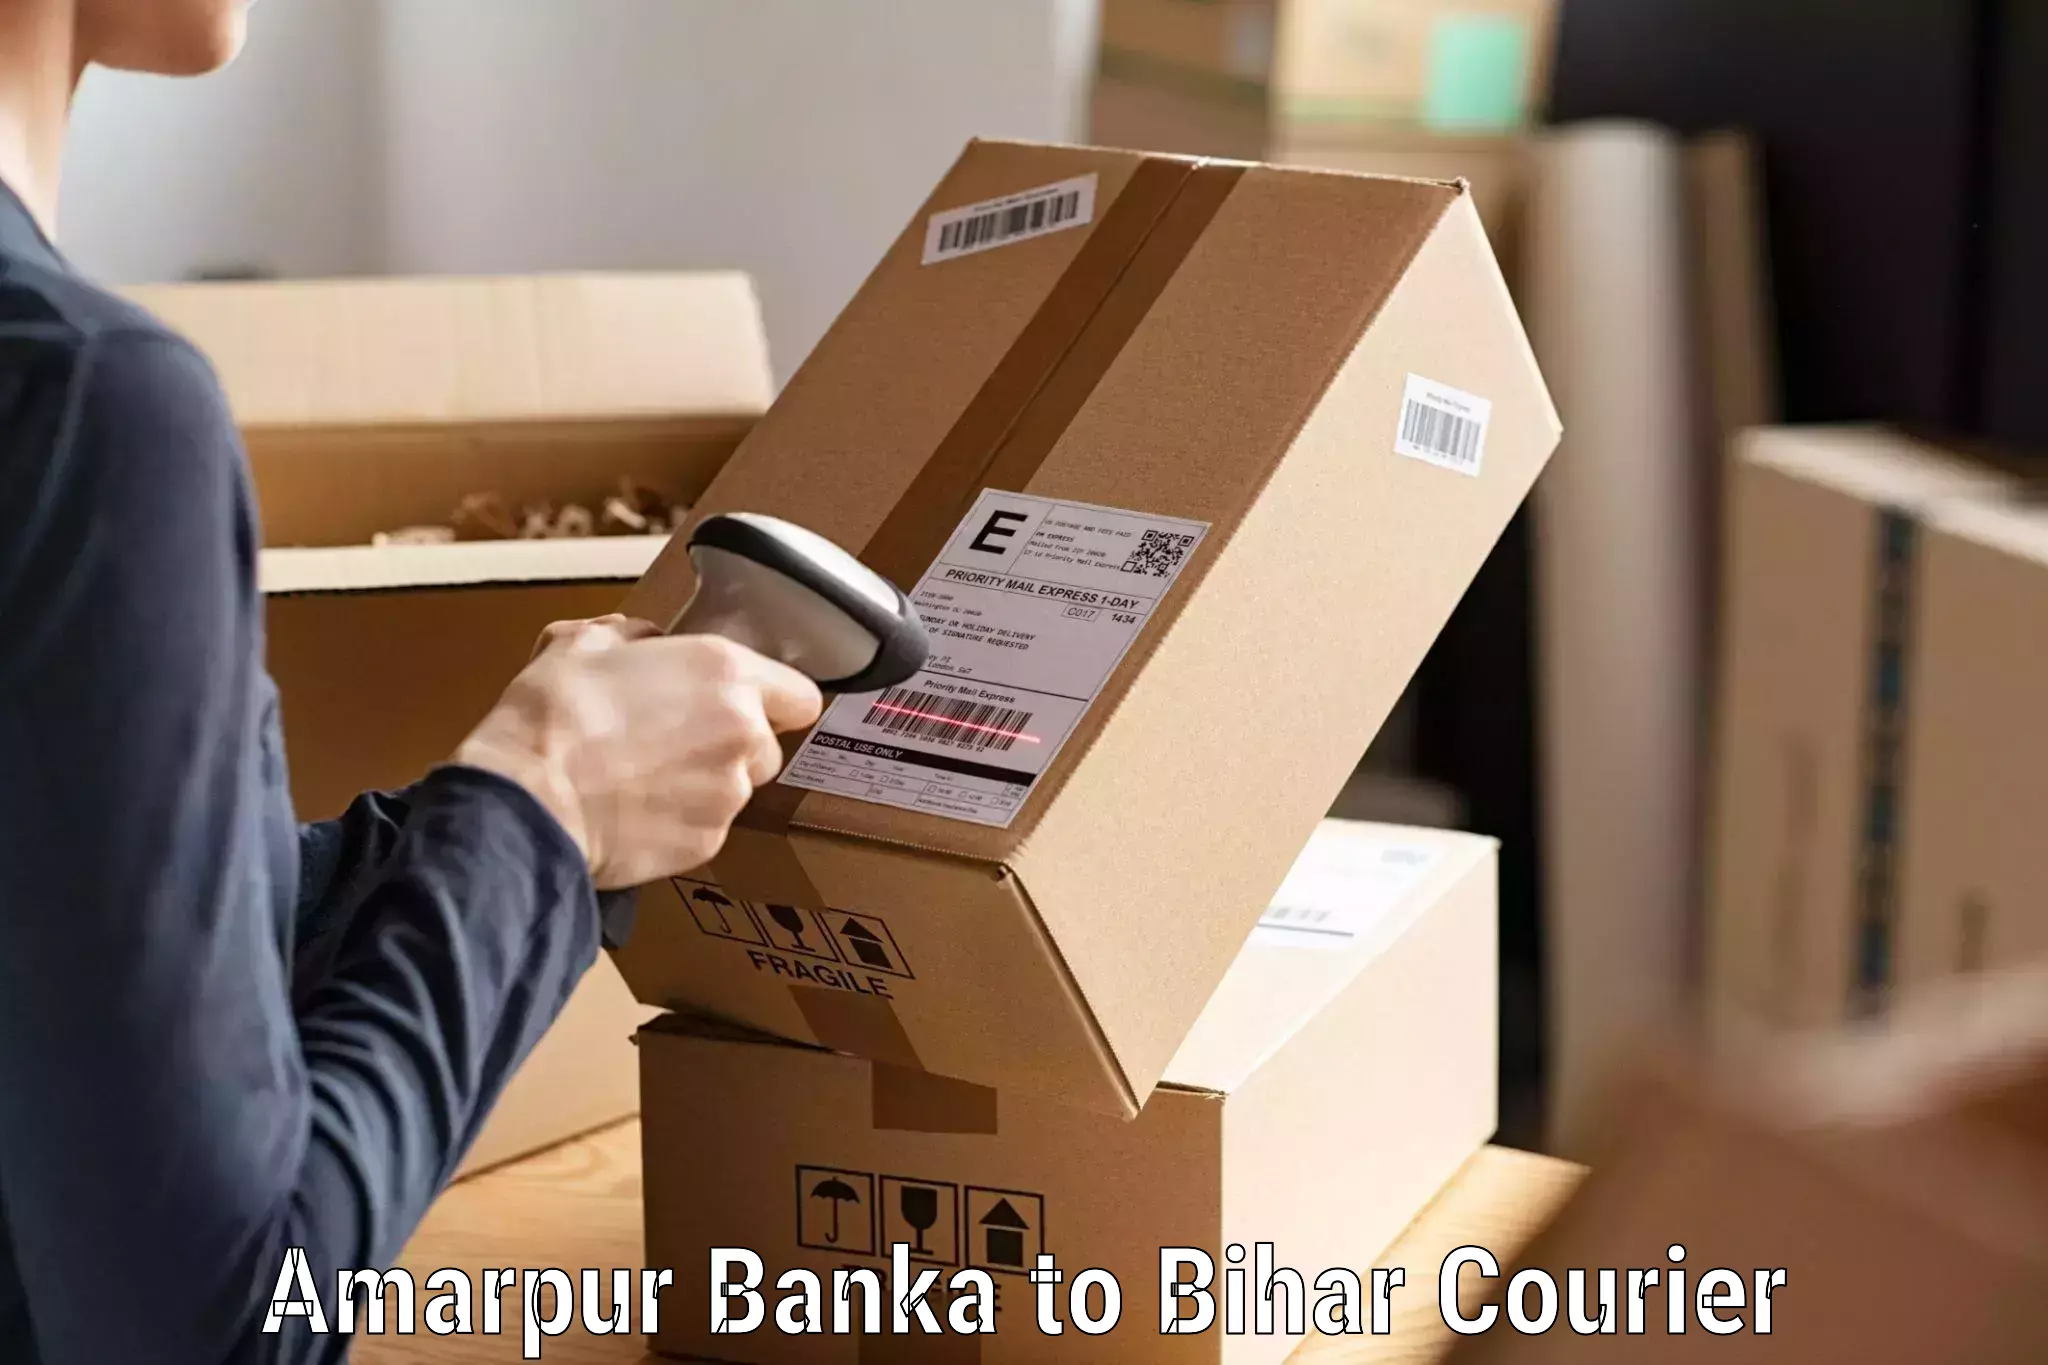 Courier service efficiency in Amarpur Banka to Amarpur Banka